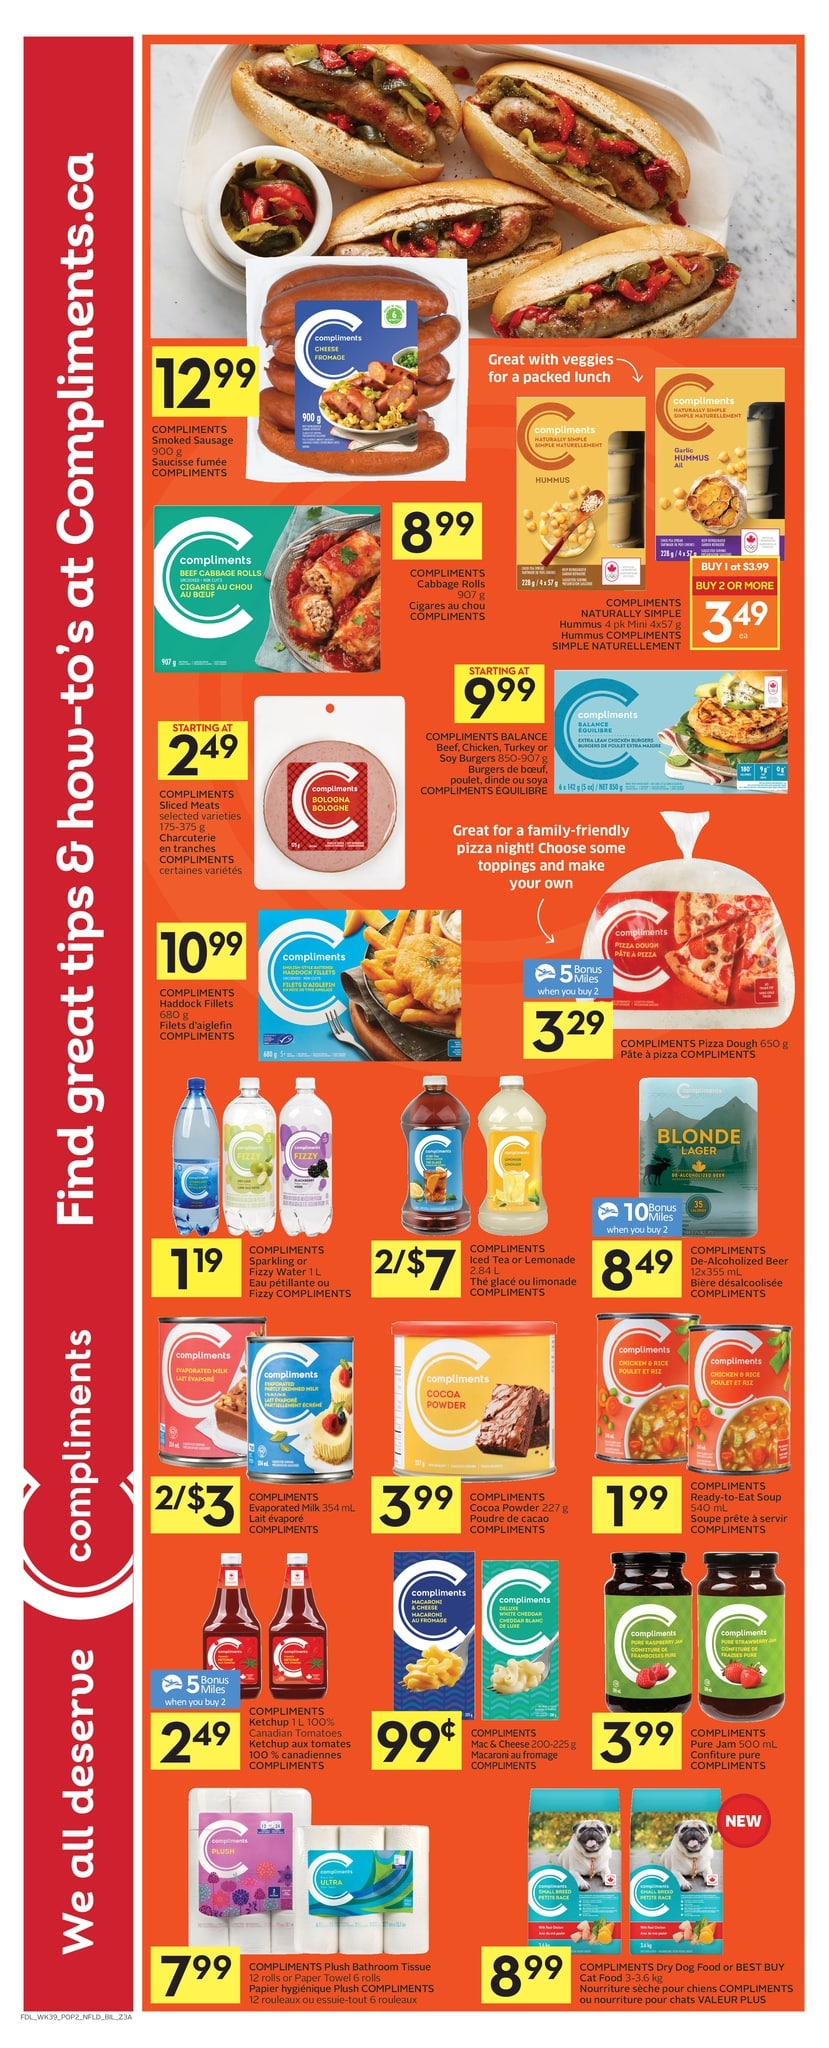 Foodland - Weekly Flyer Specials - Page 4